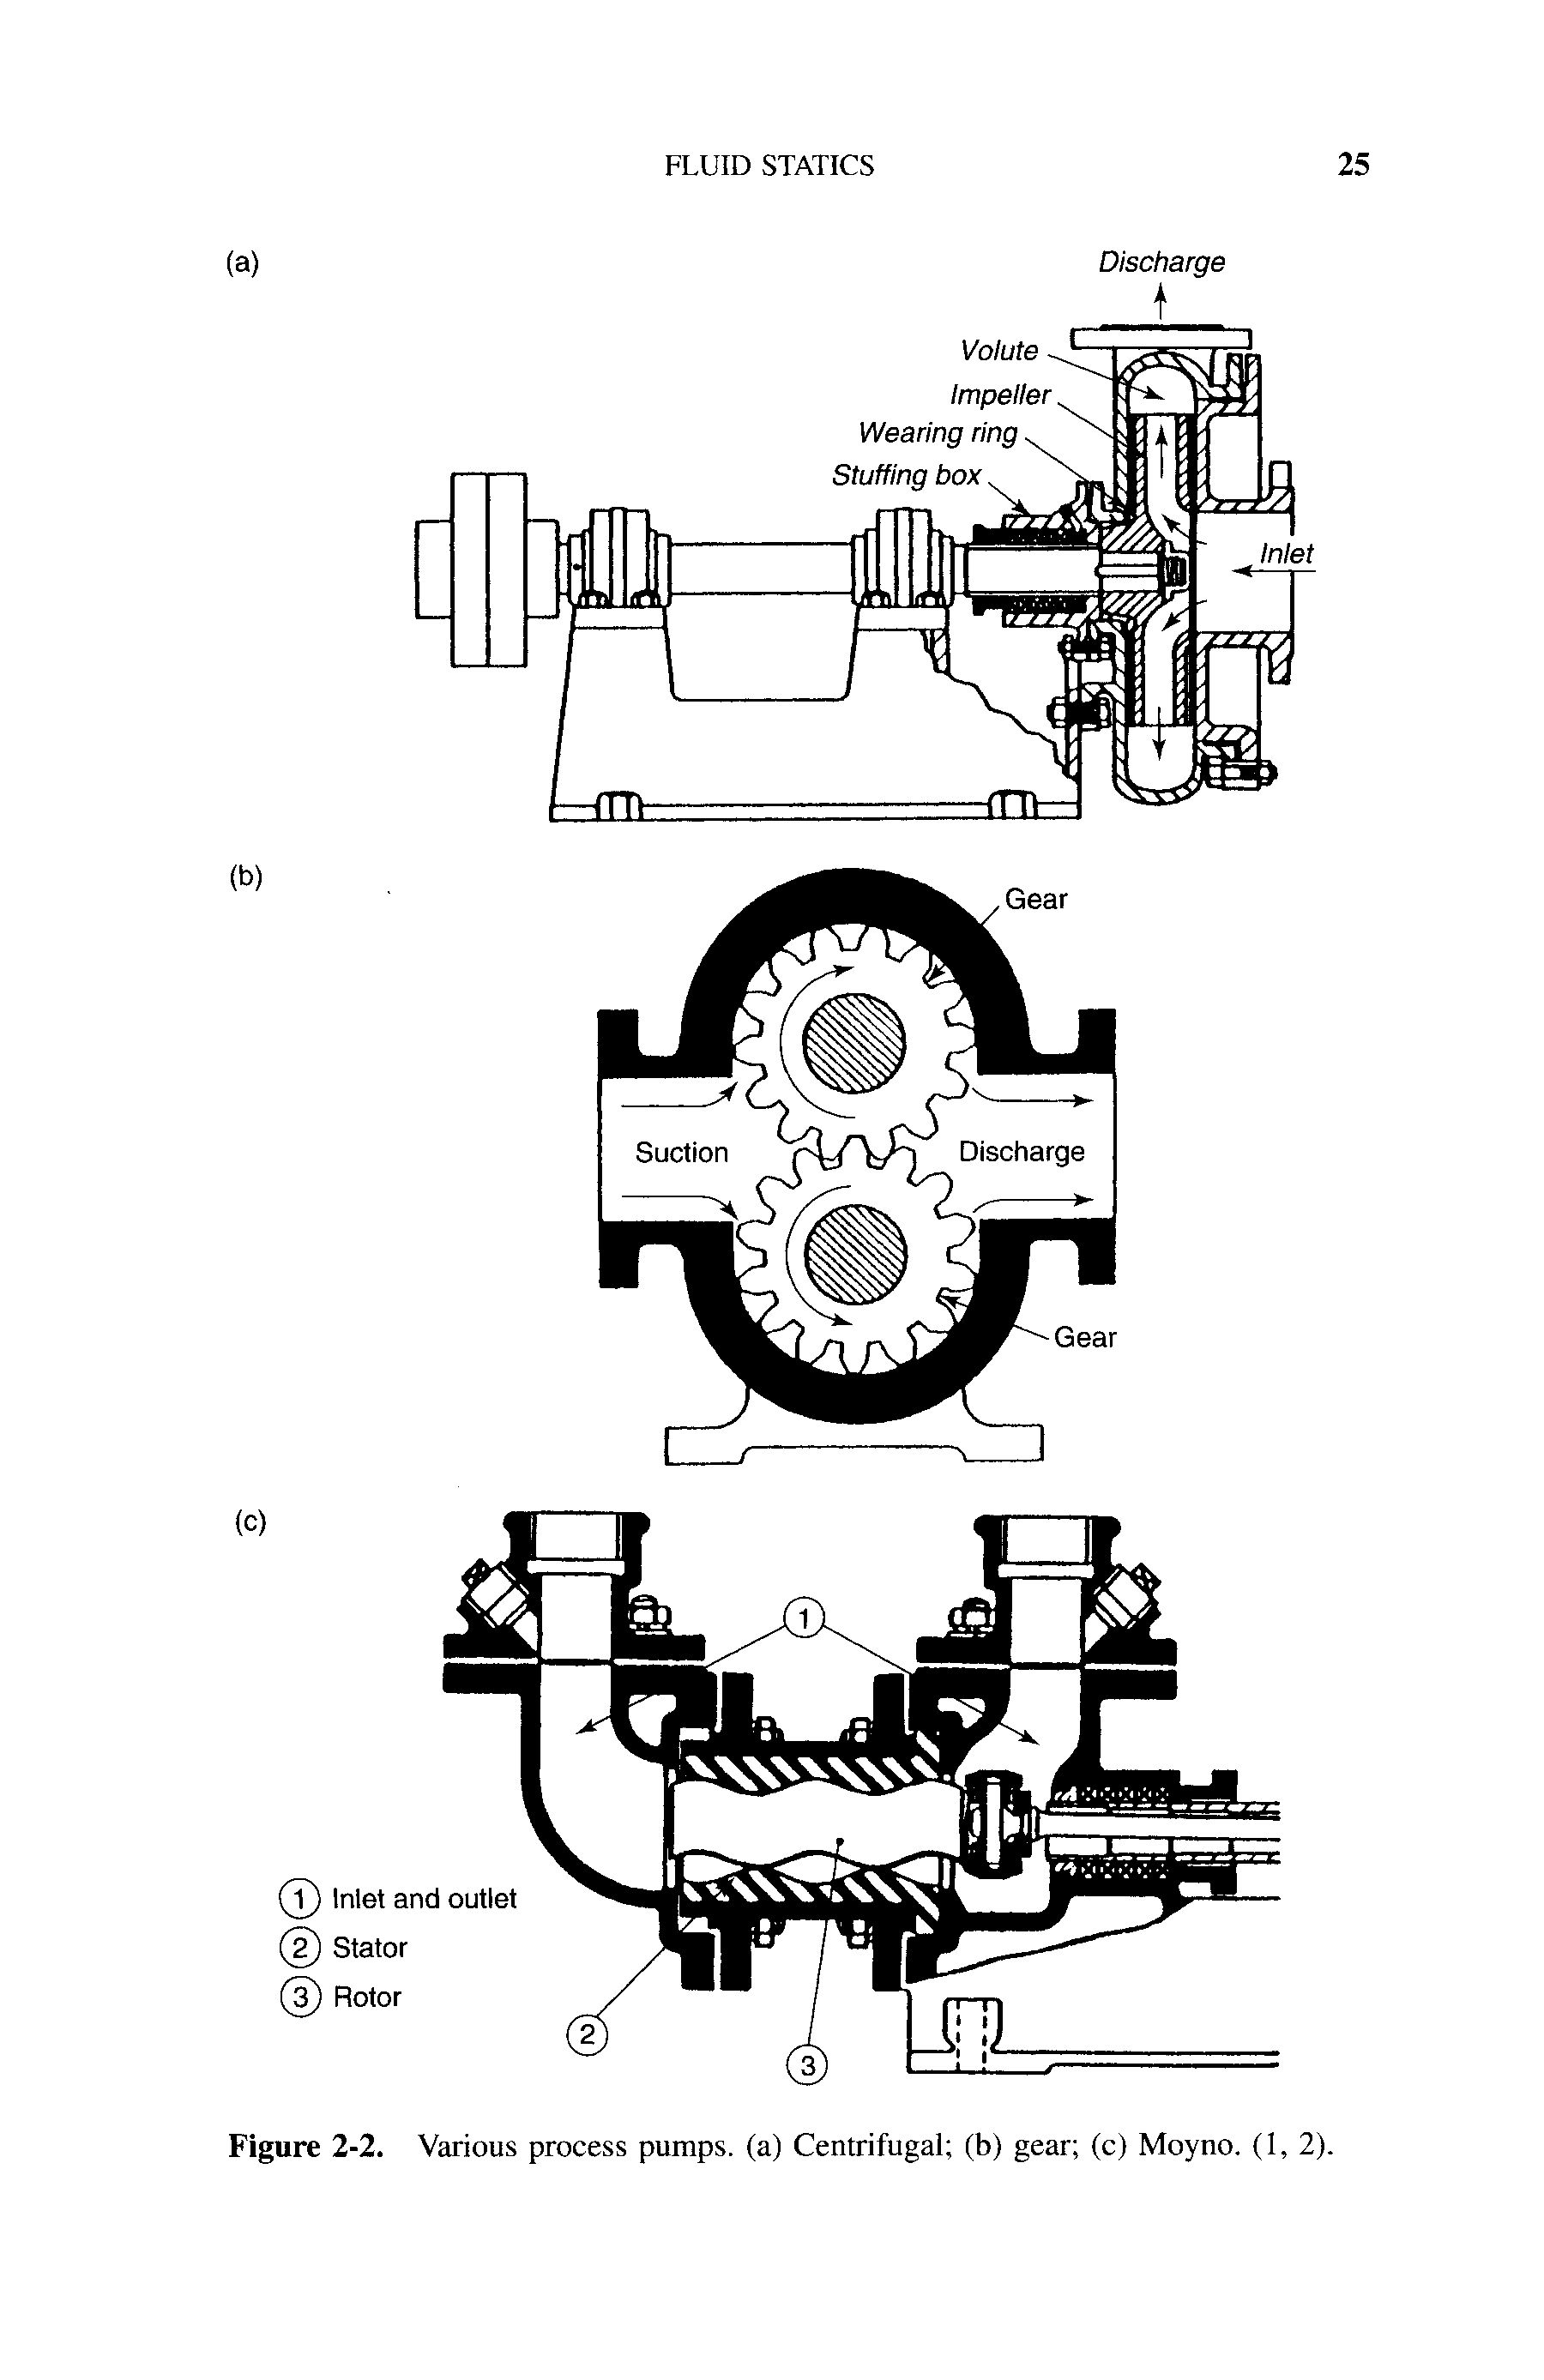 Figure 2-2. Various process pumps, (a) Centrifugal (b) gear (c) Moyno. (1, 2).